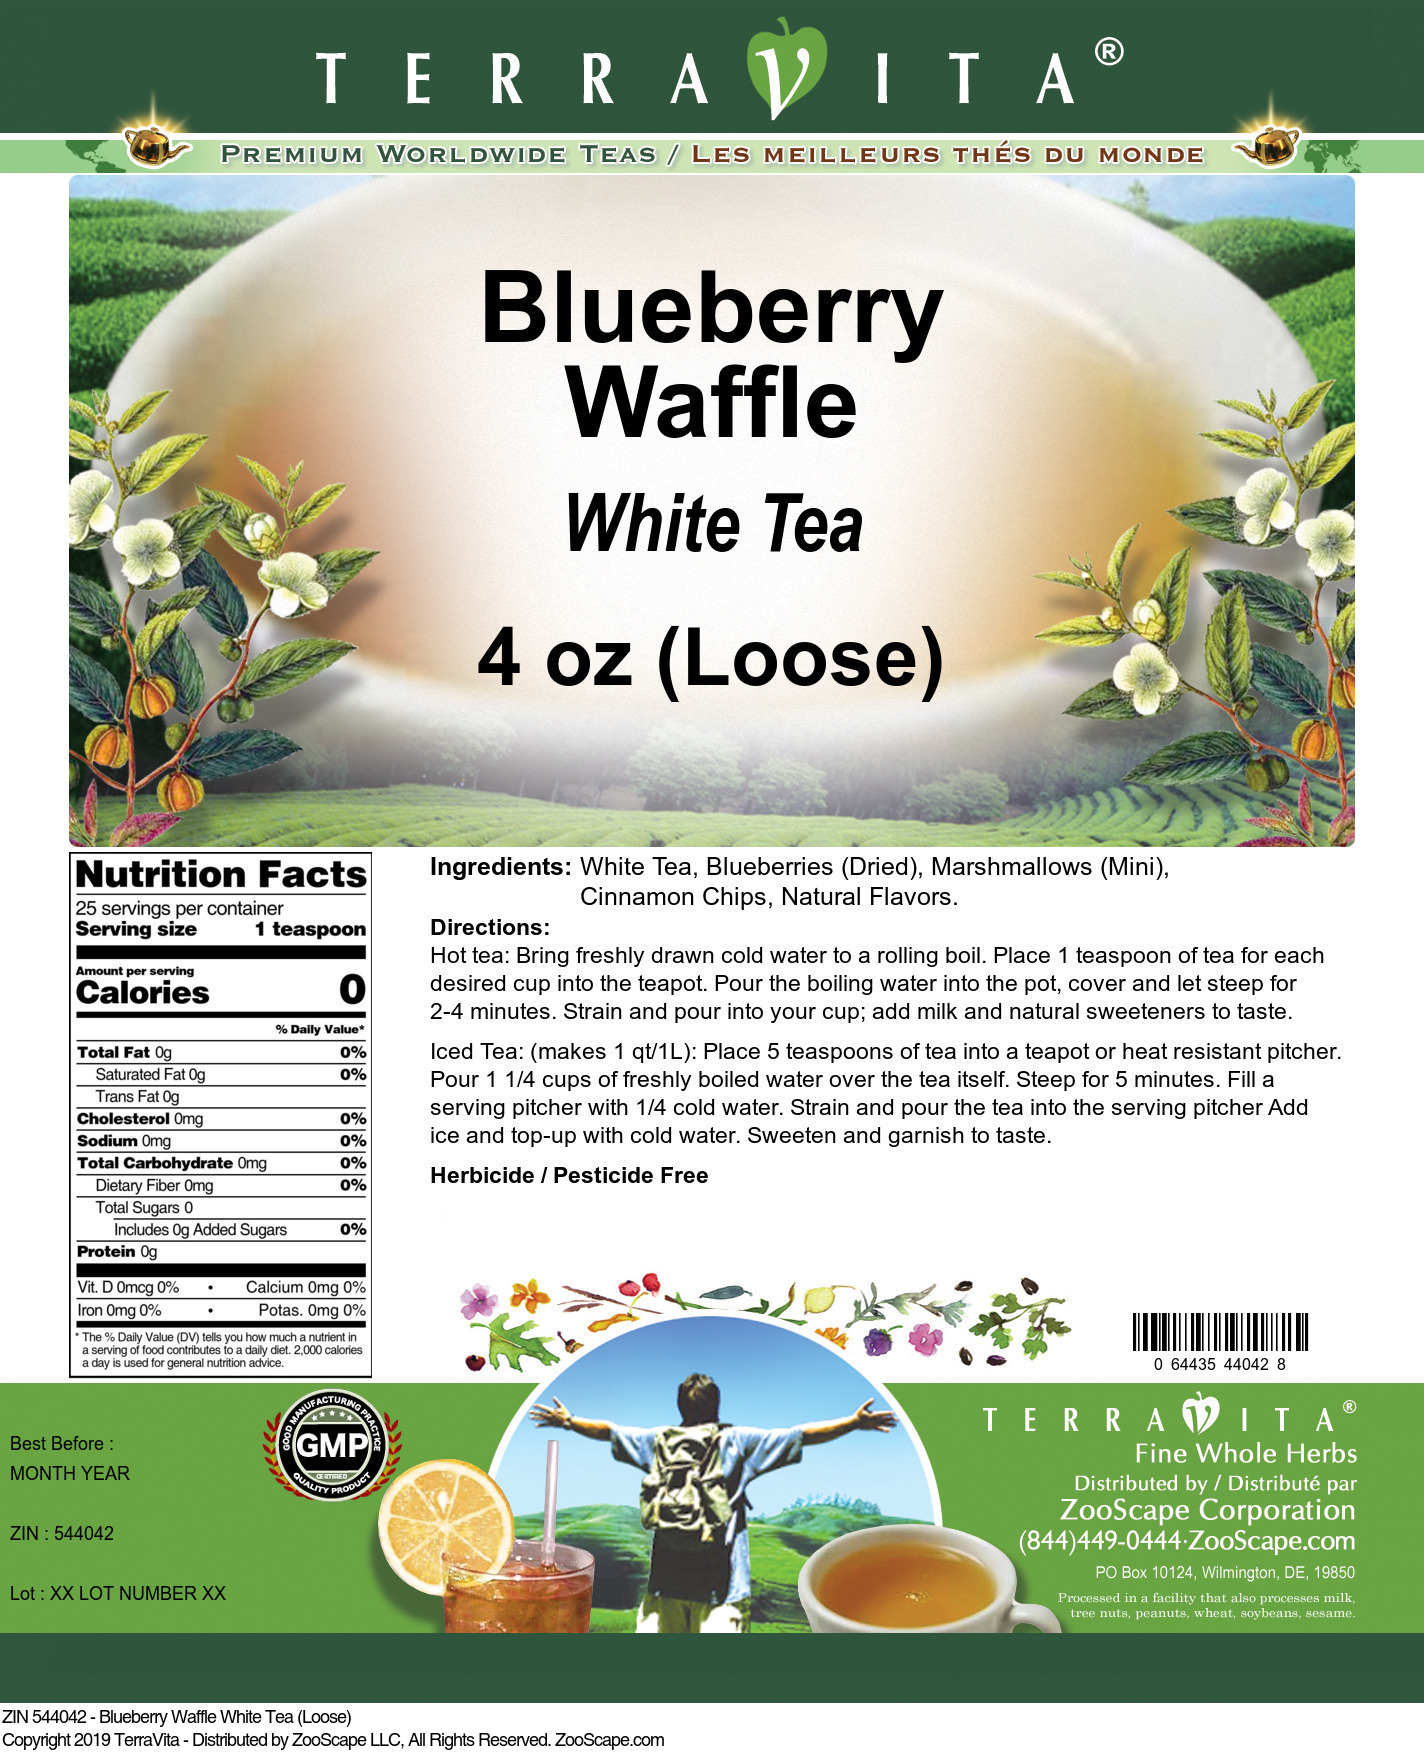 Blueberry Waffle White Tea (Loose) - Label